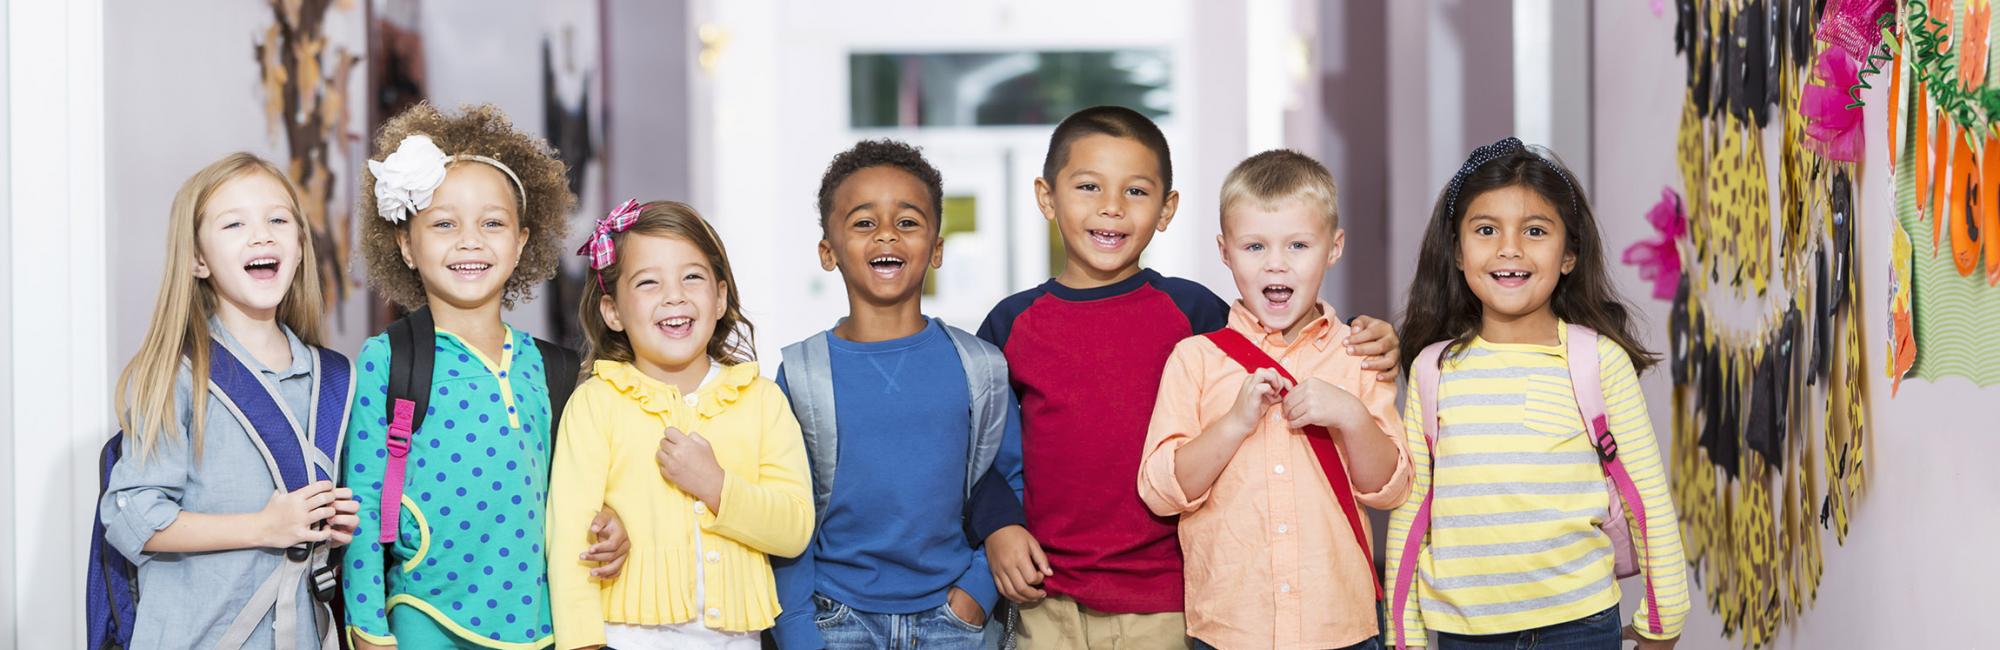 Diverse groud of children standing in a hallway of an elementary school